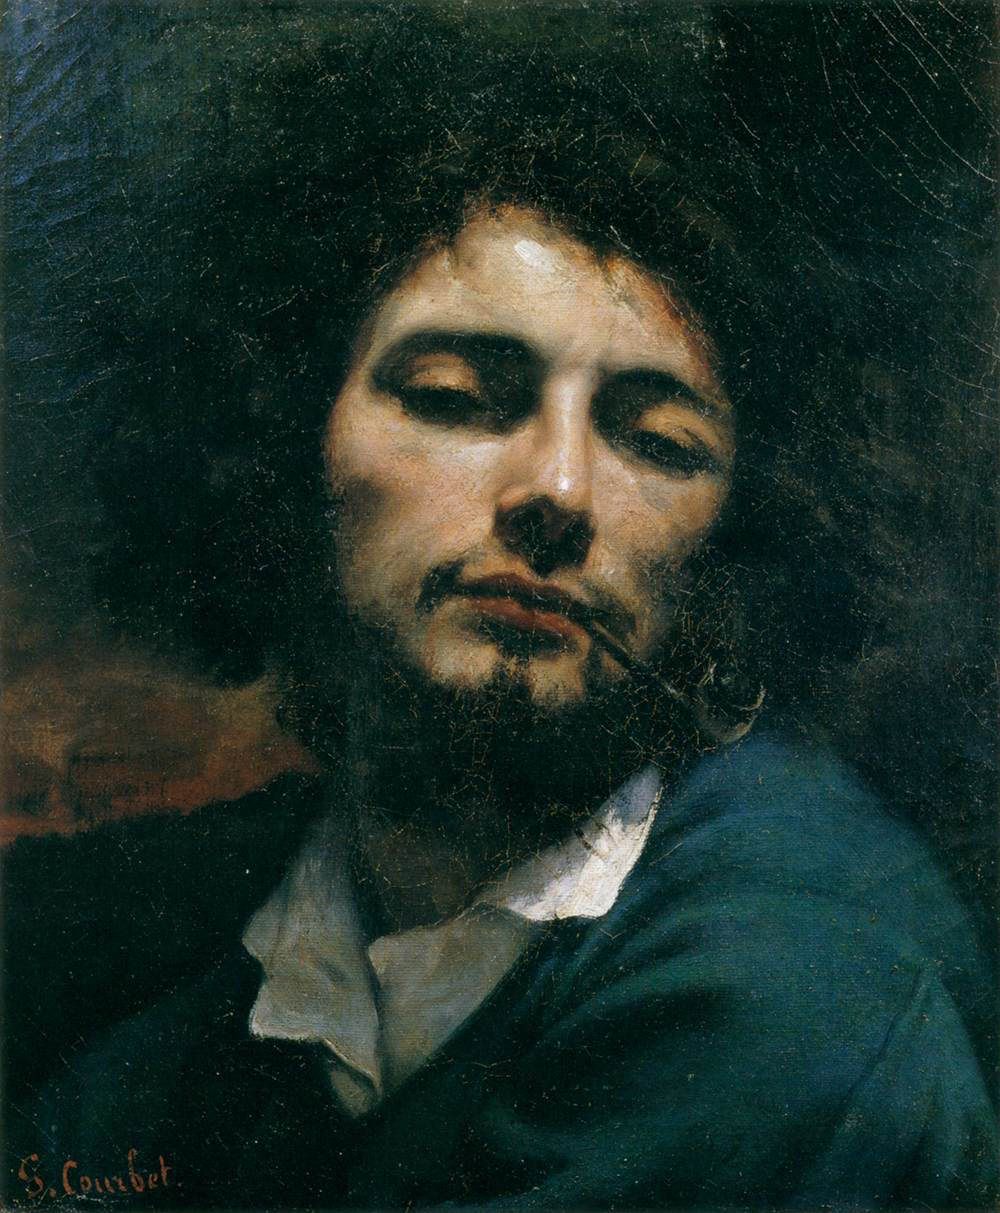 Gustave_Courbet_-_Self-Portrait_Man_with_Pipe_-_WGA05491.jpg.optimal.jpg